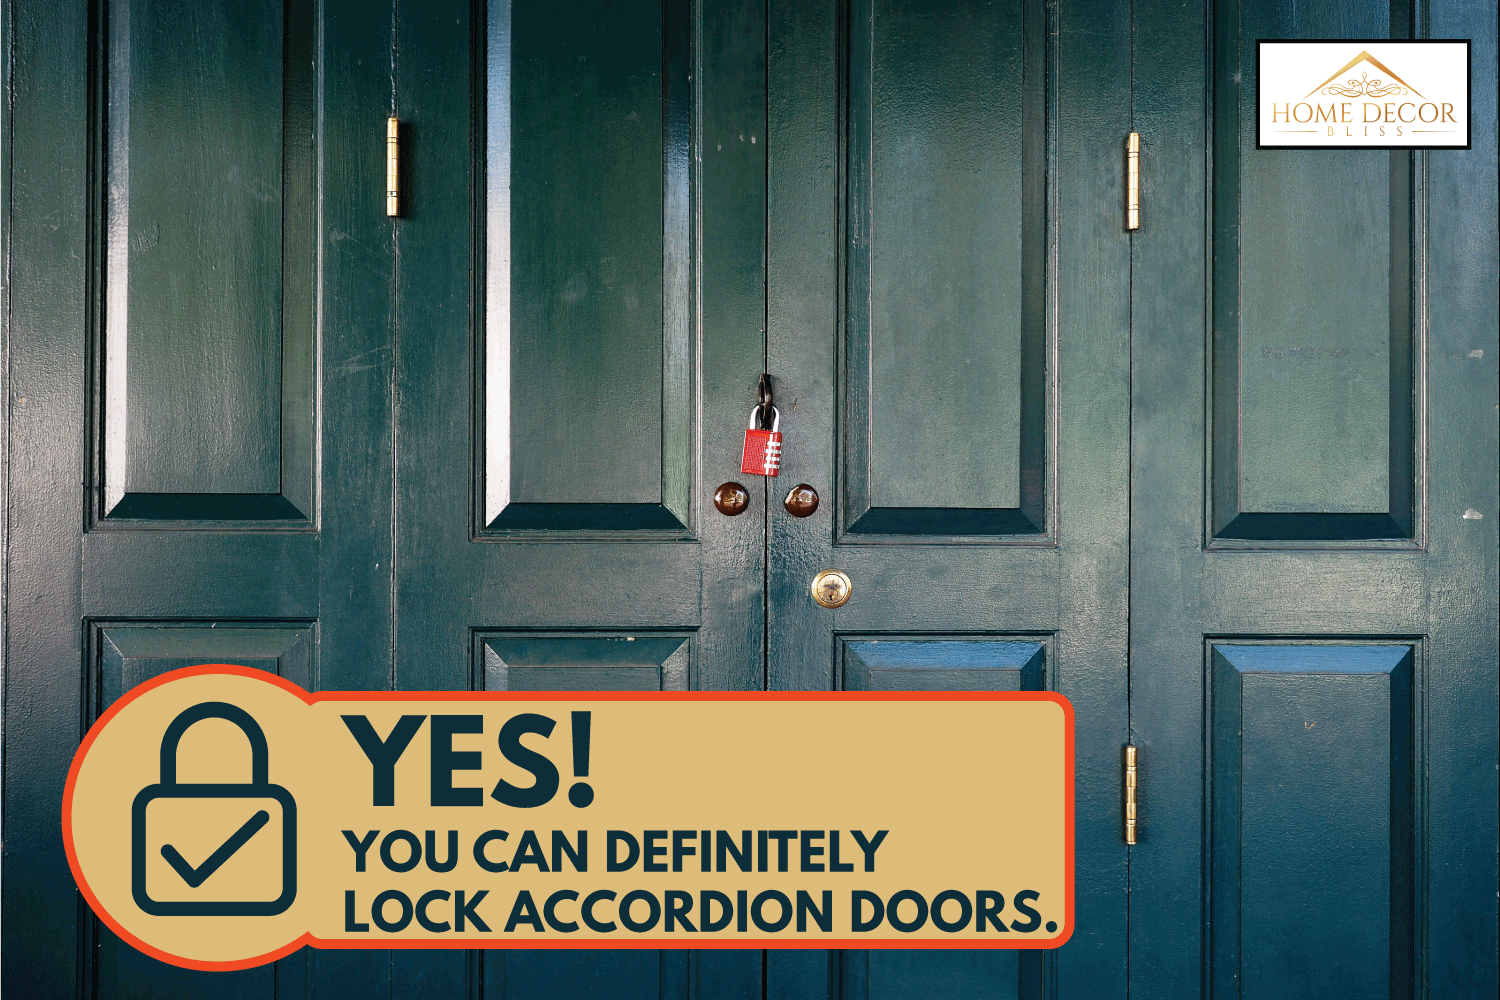 Green vintage wooden accordion doors with old locks. Can You Lock an Accordion Door